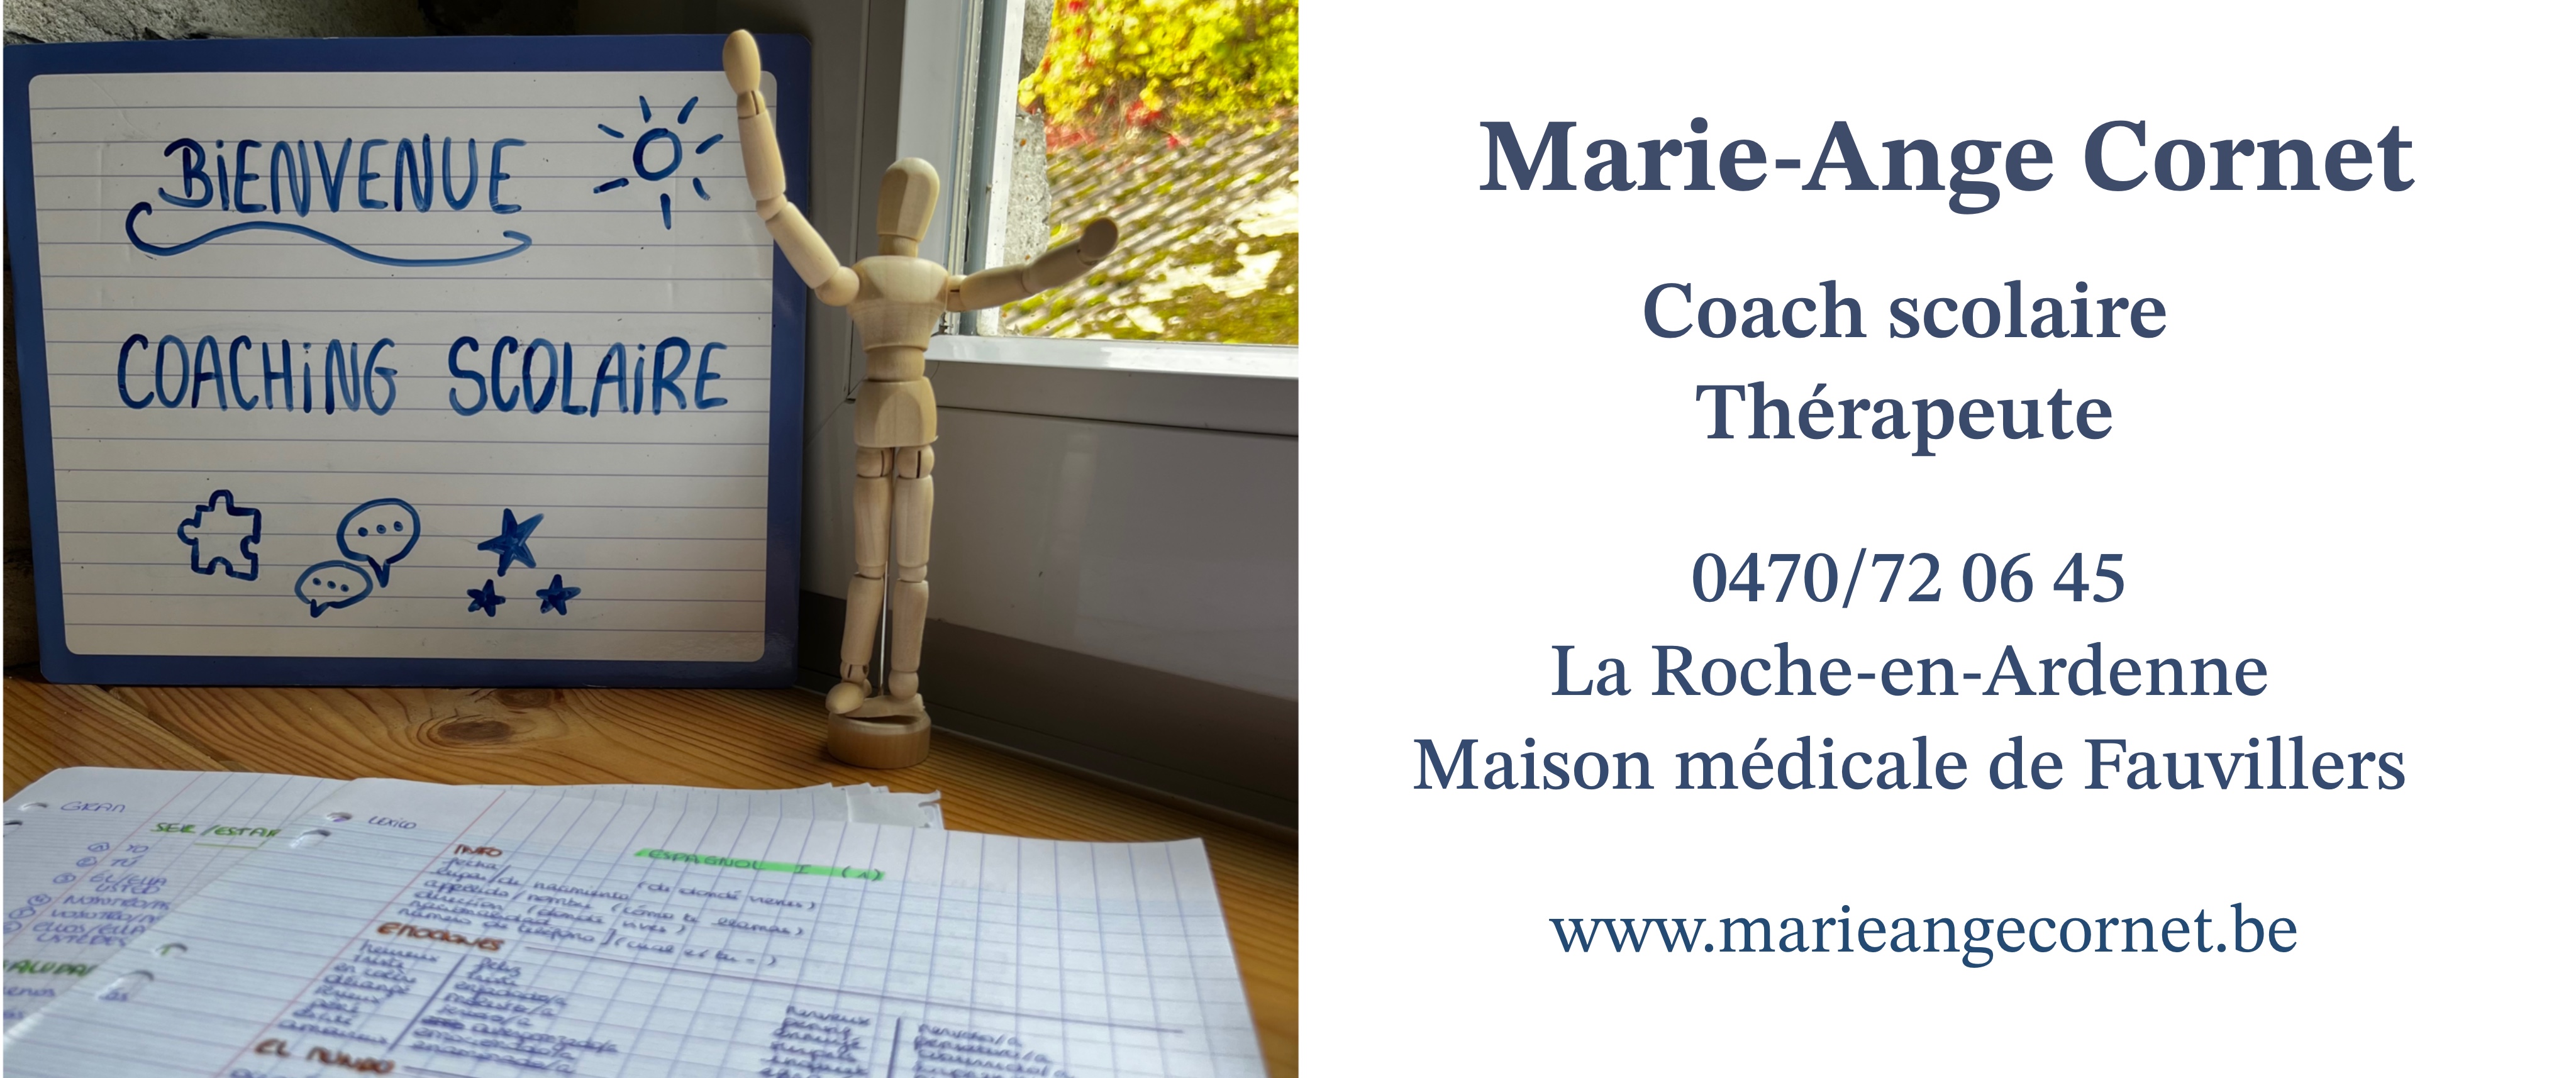 Coaching scolaire – Marie-Ange Cornet